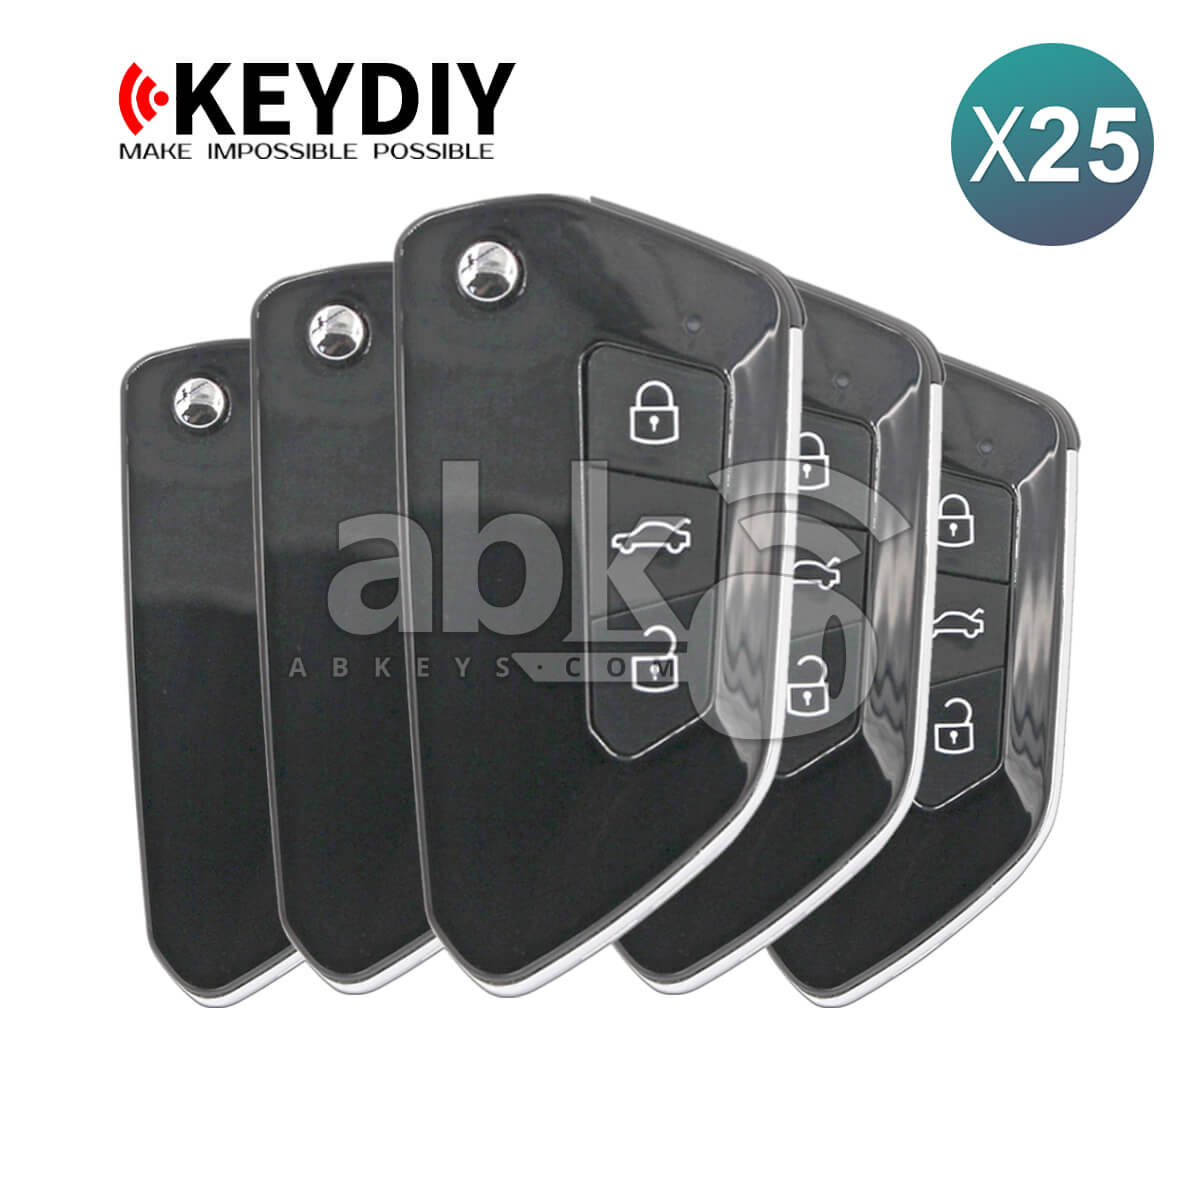 KeyDiy KD Universal Remote B Series Golf8 Type With 3Buttons B33 25Pcs Bundle - ABK-1010-B33-OFF25